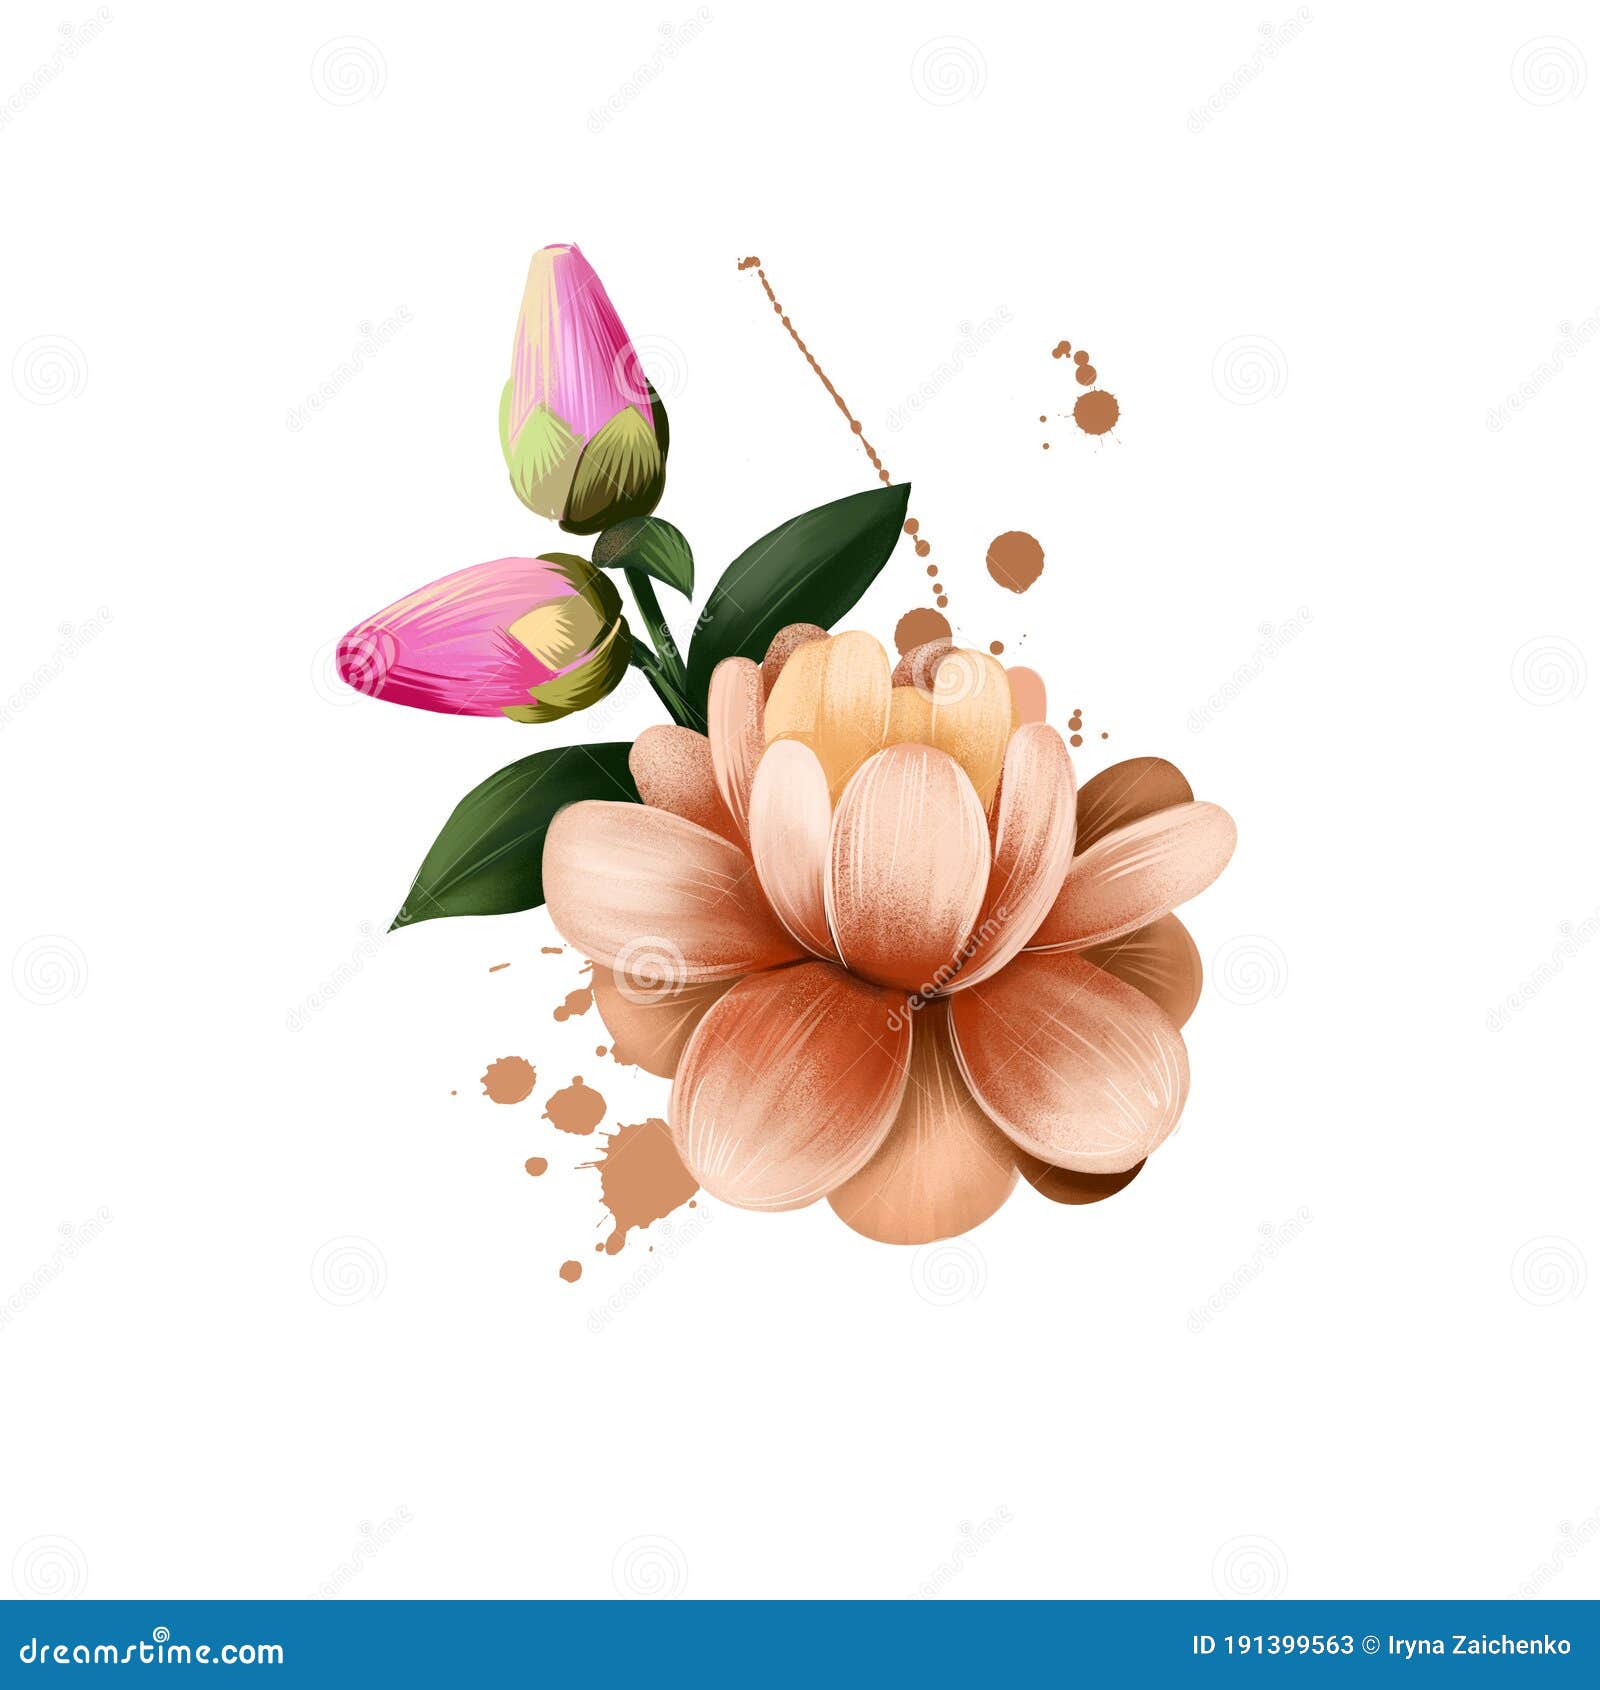 Digital Art Illustration of Camellia Japonica Isolated on White. Hand